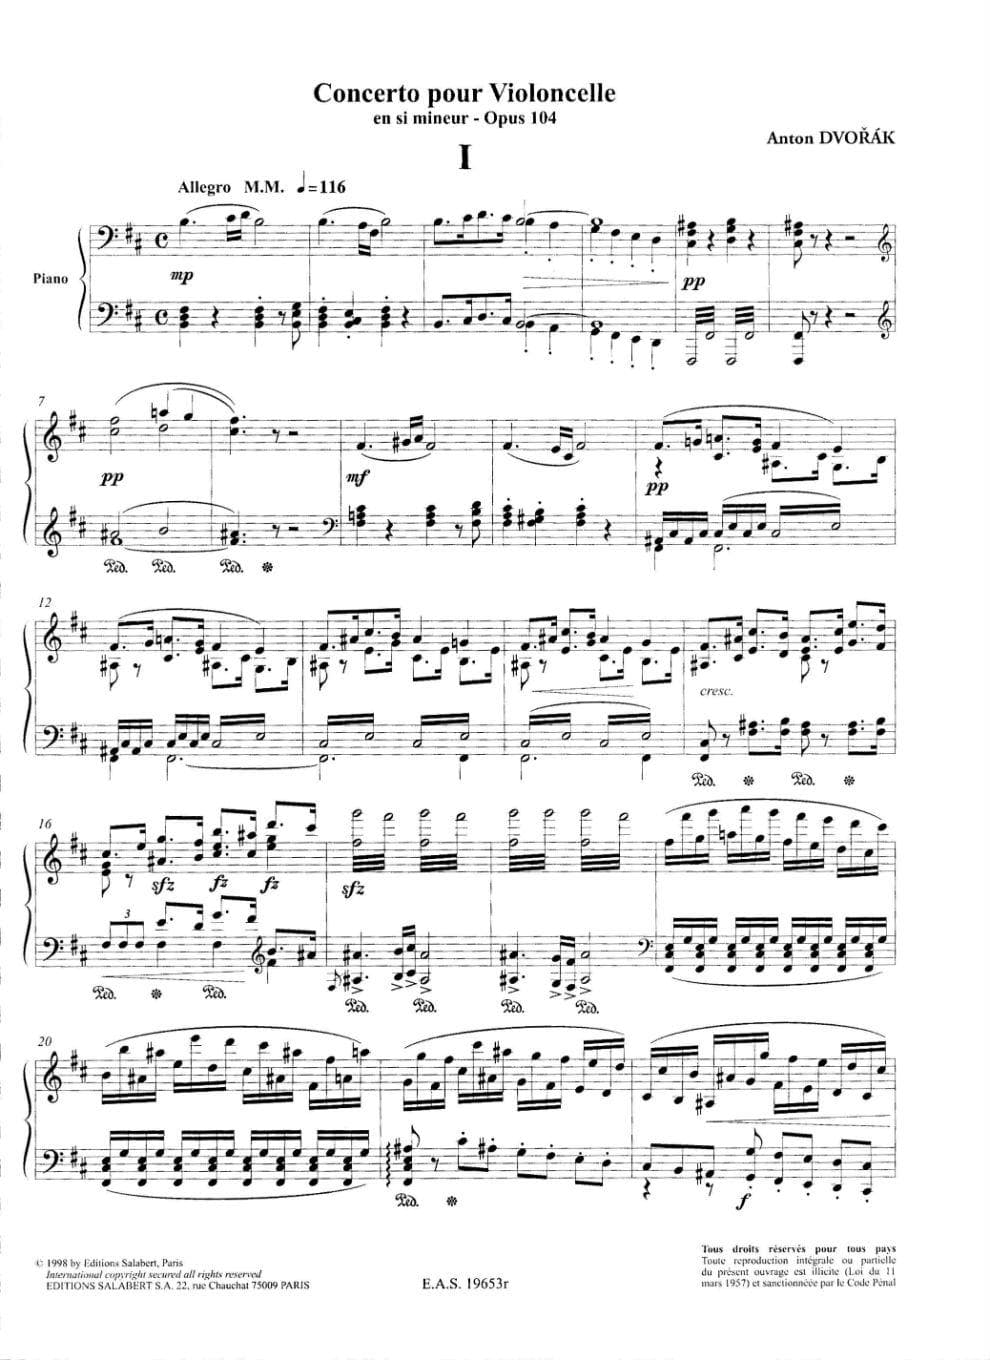 Dvorak, Antonin - Concerto in B minor, Op 104  - Cello and Piano - Book/CD set - edited by Andre Navarra and Marcel Bardon - Editions Salabert